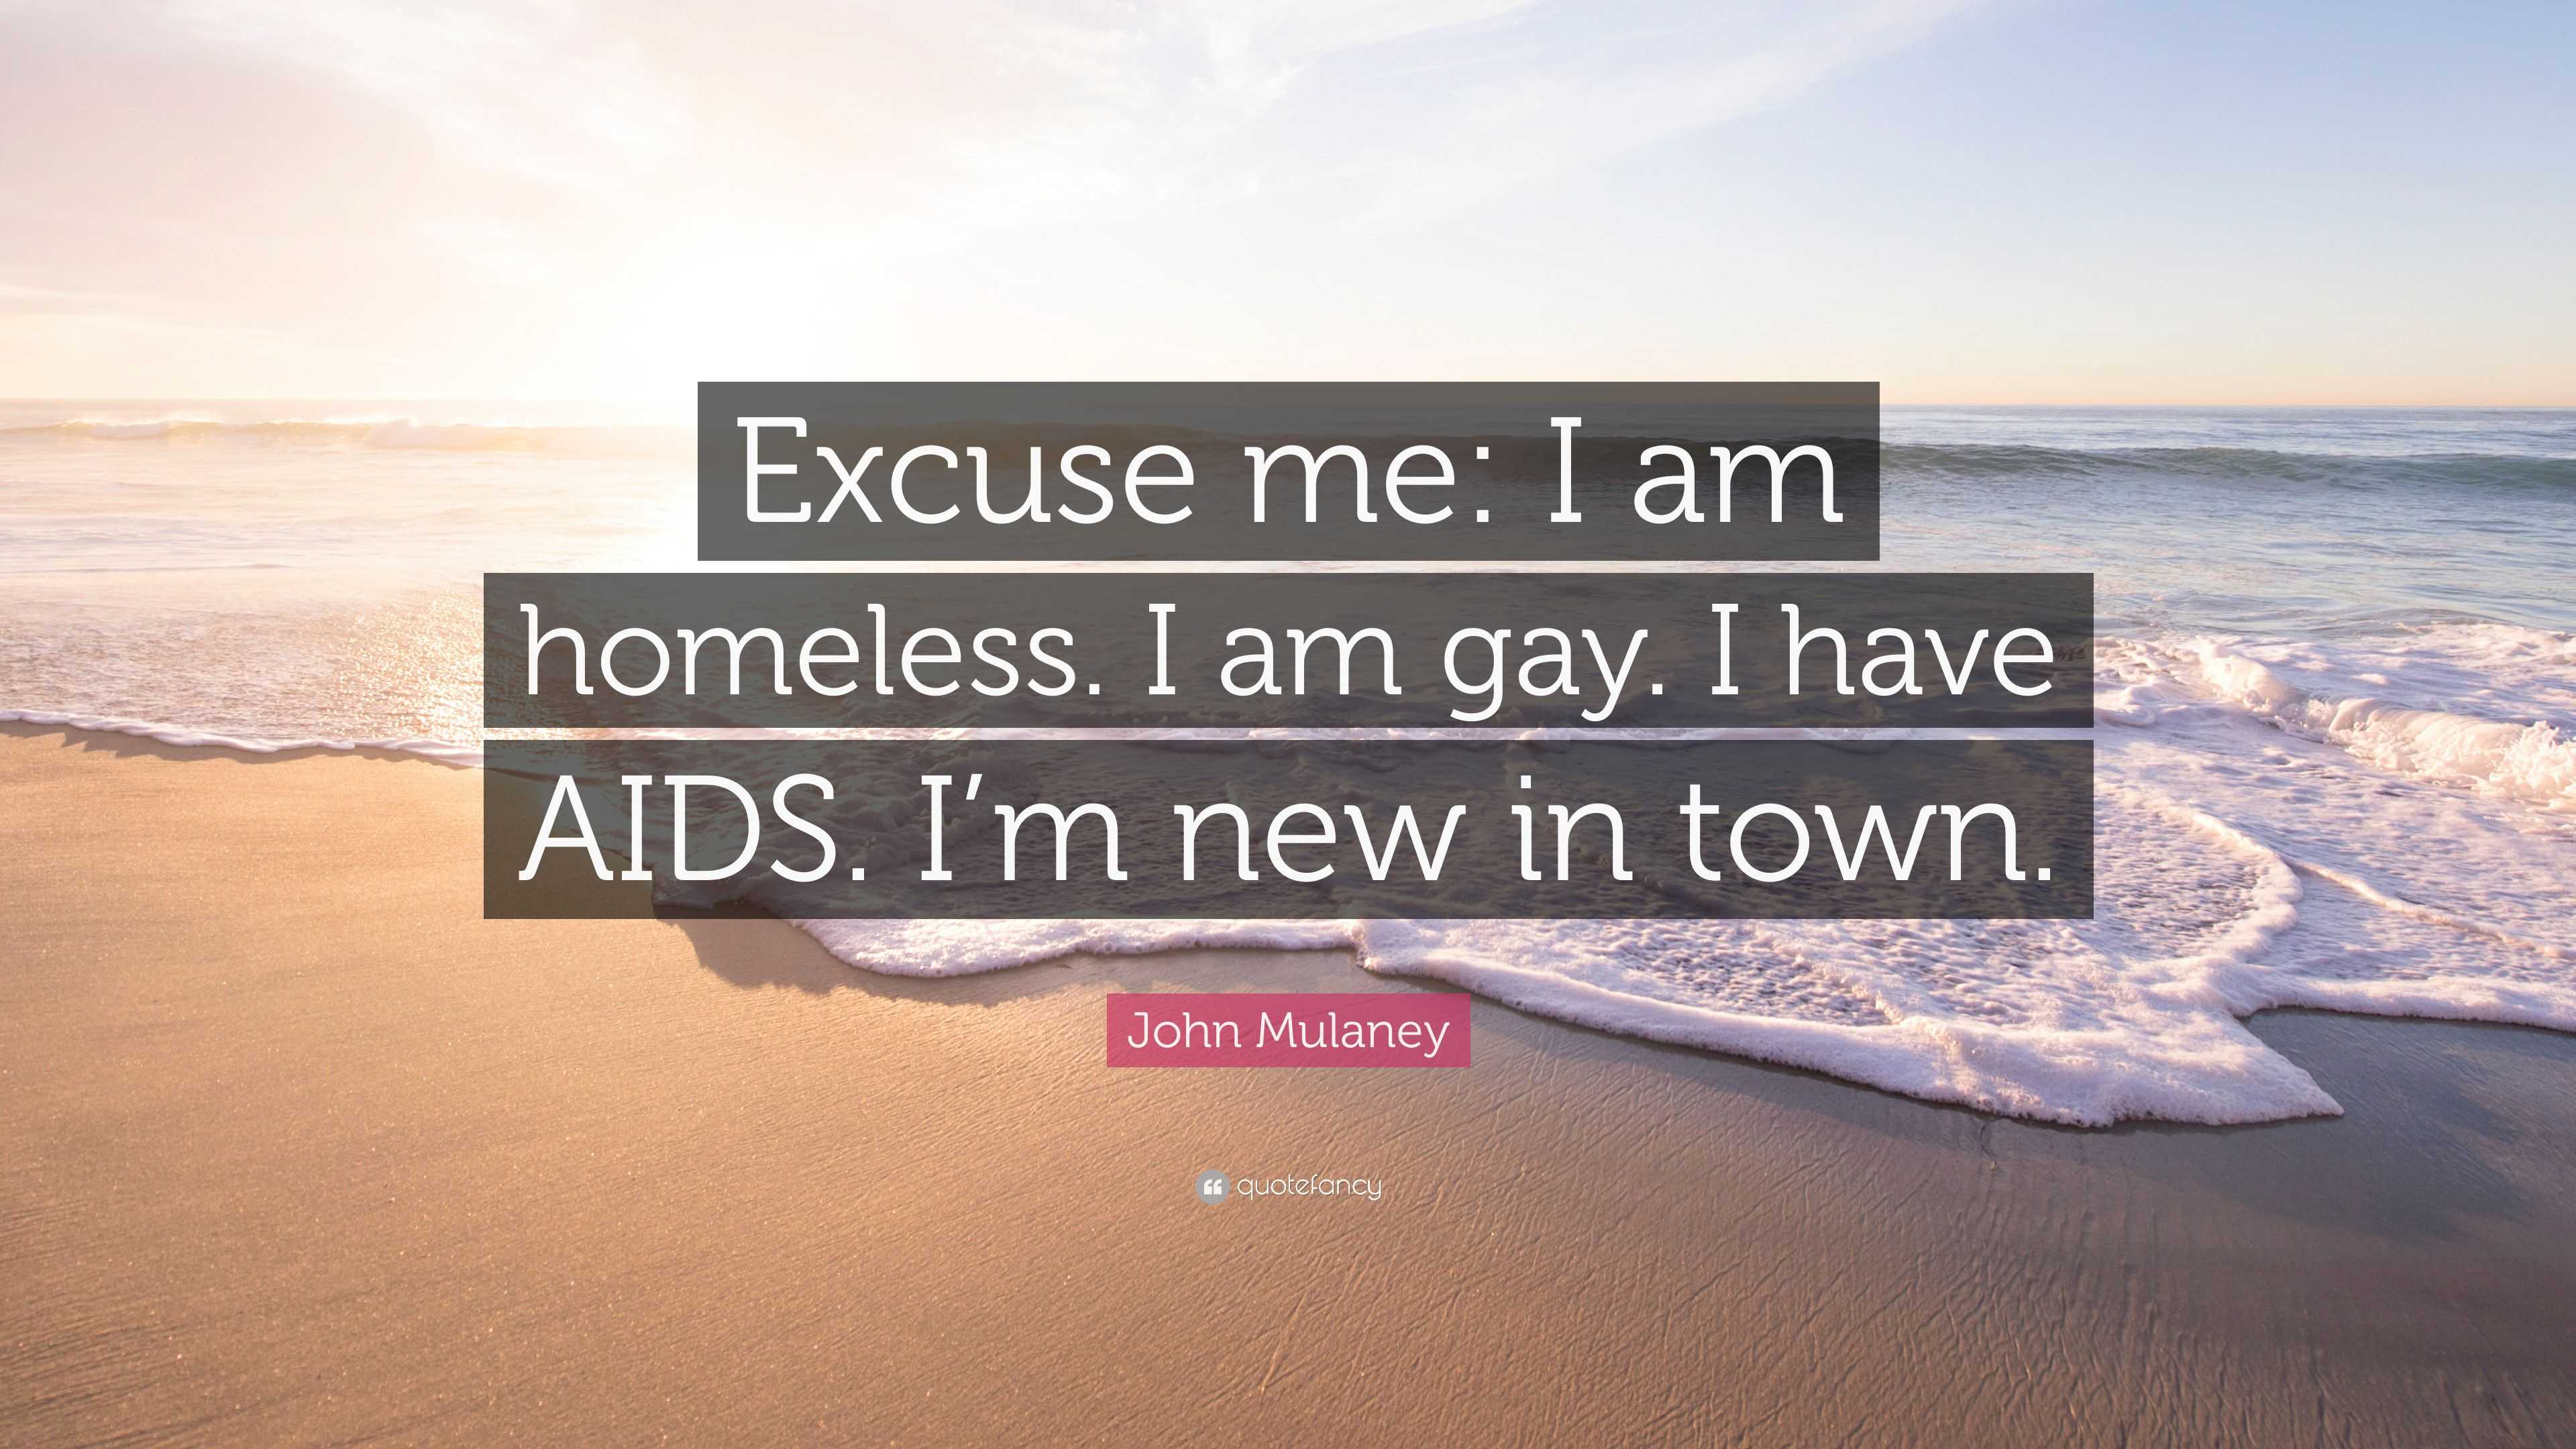 John Mulaney Quote “Excuse me I am homeless. I am gay. I have AIDS. I